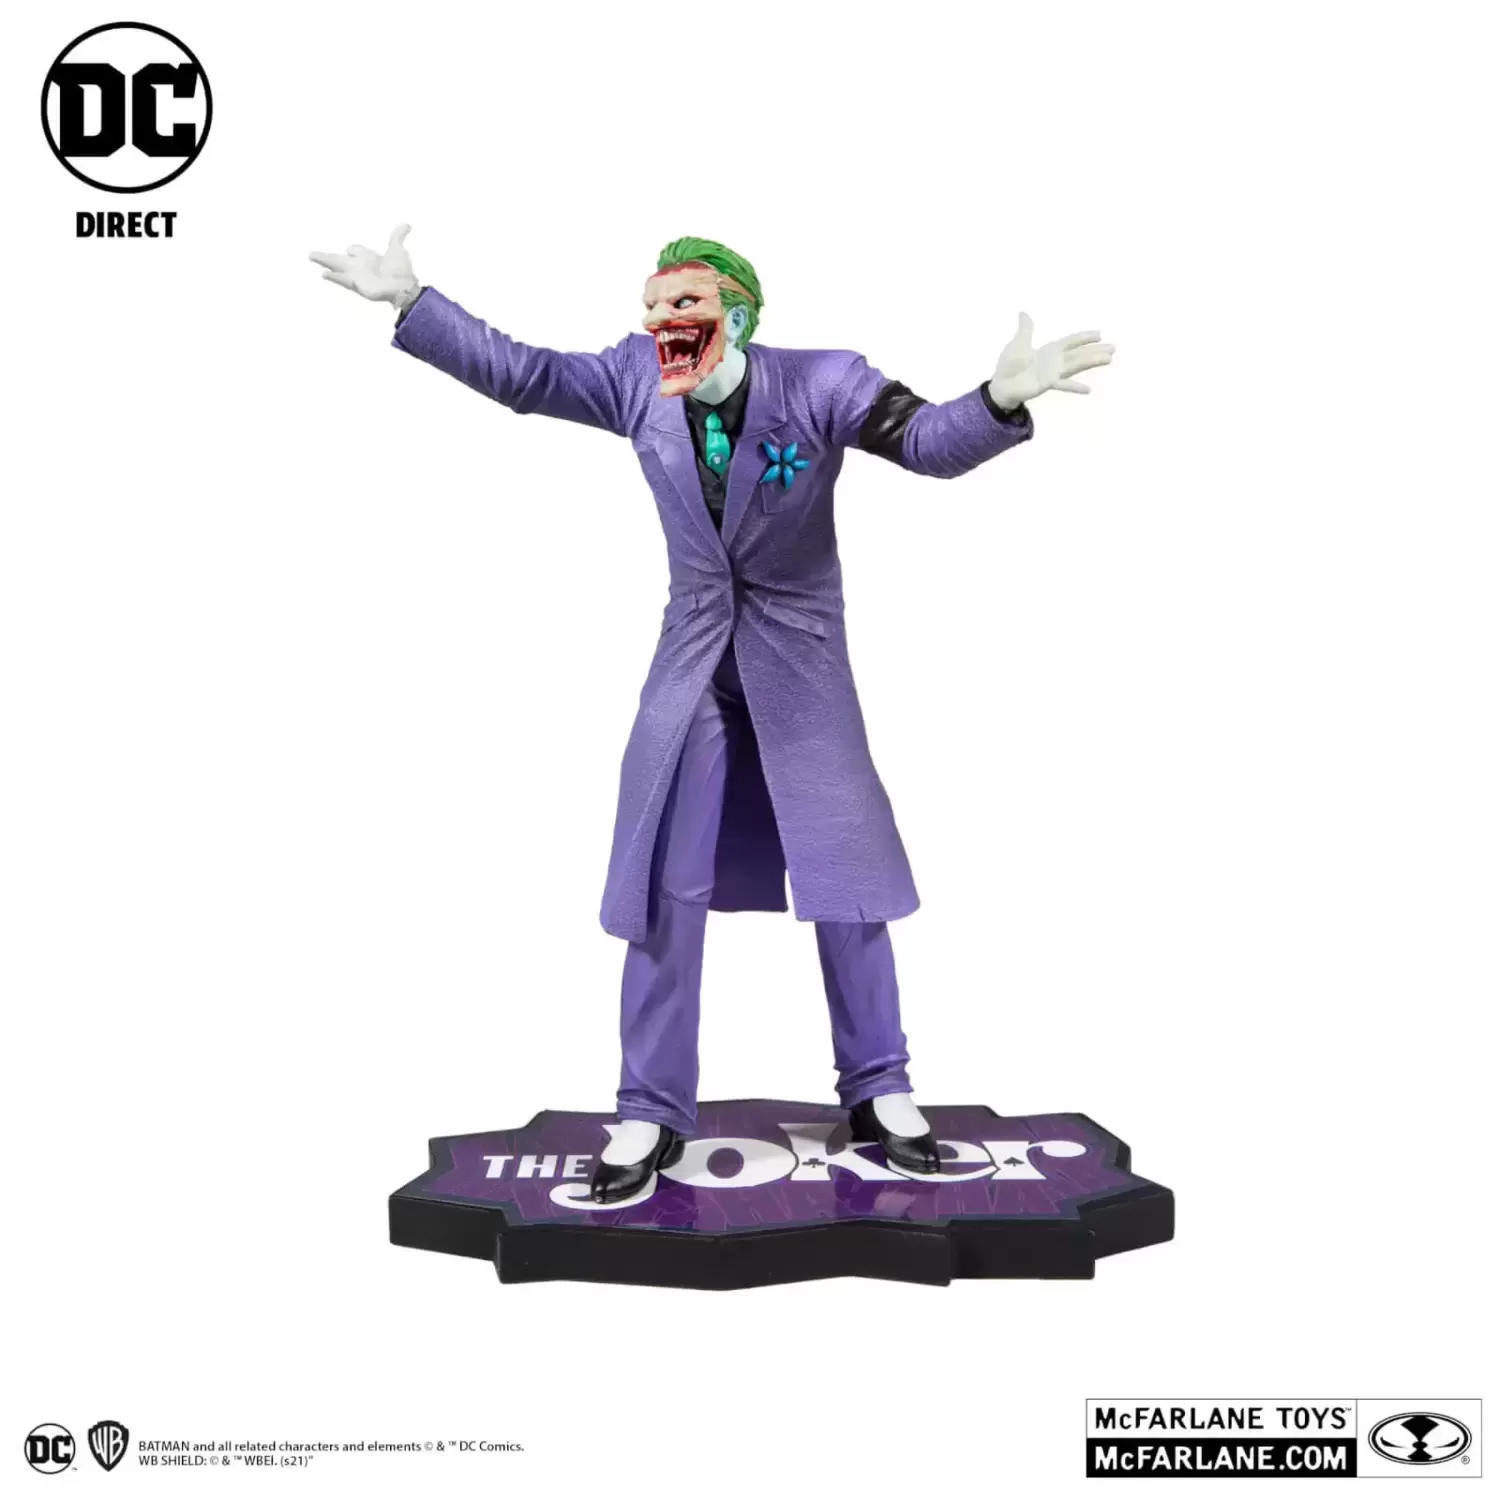 DC Collectibles Statues - The Joker: Purple Craze by Greg Capullo - DC Direct